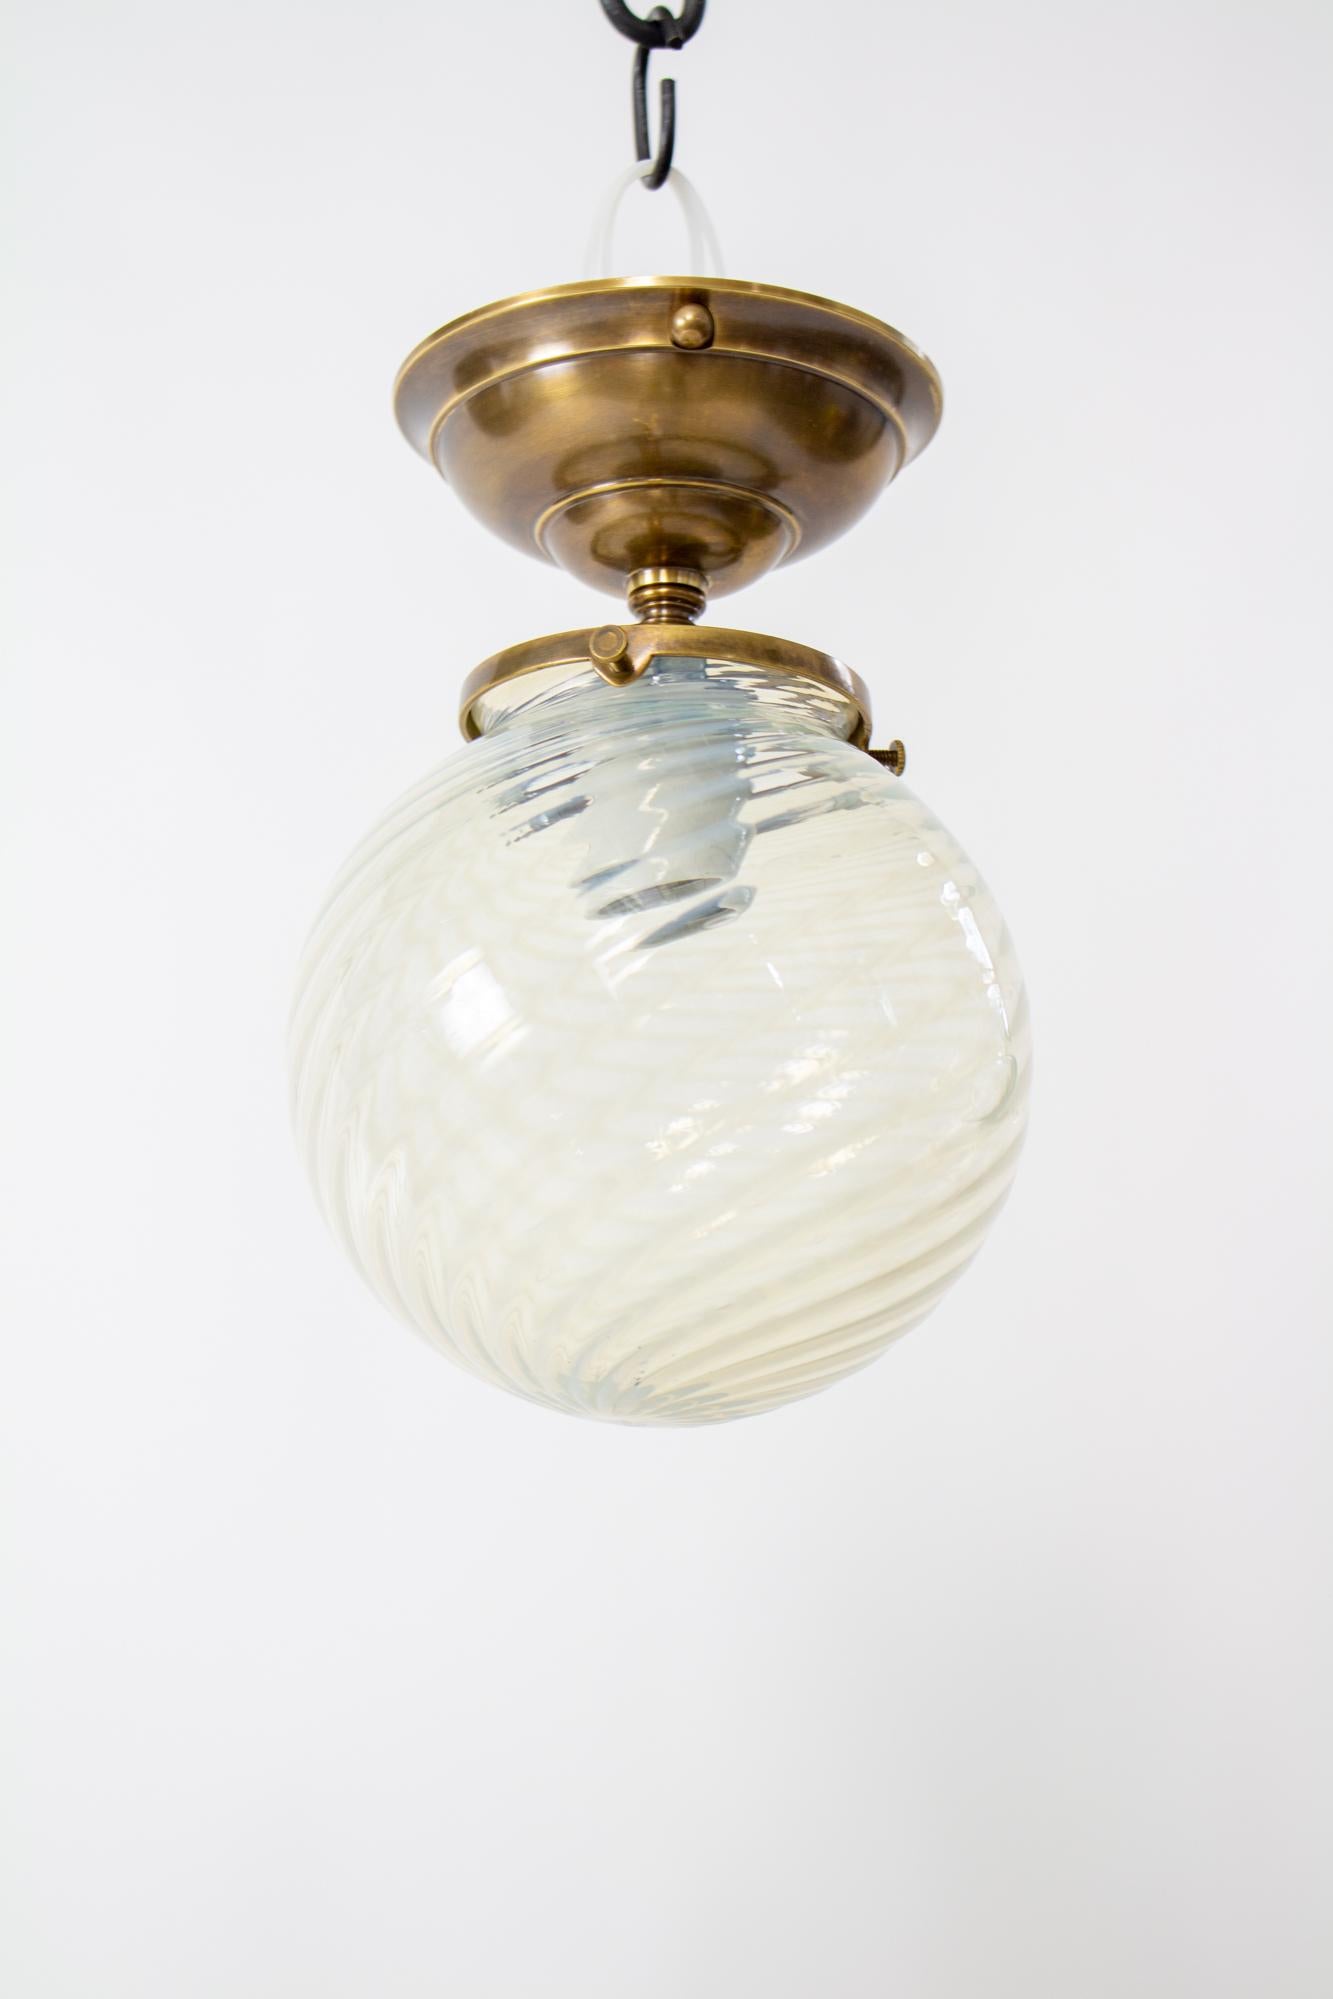 Late Victorian 19th Century Opalescent Globe Flush Mount Light Fixture